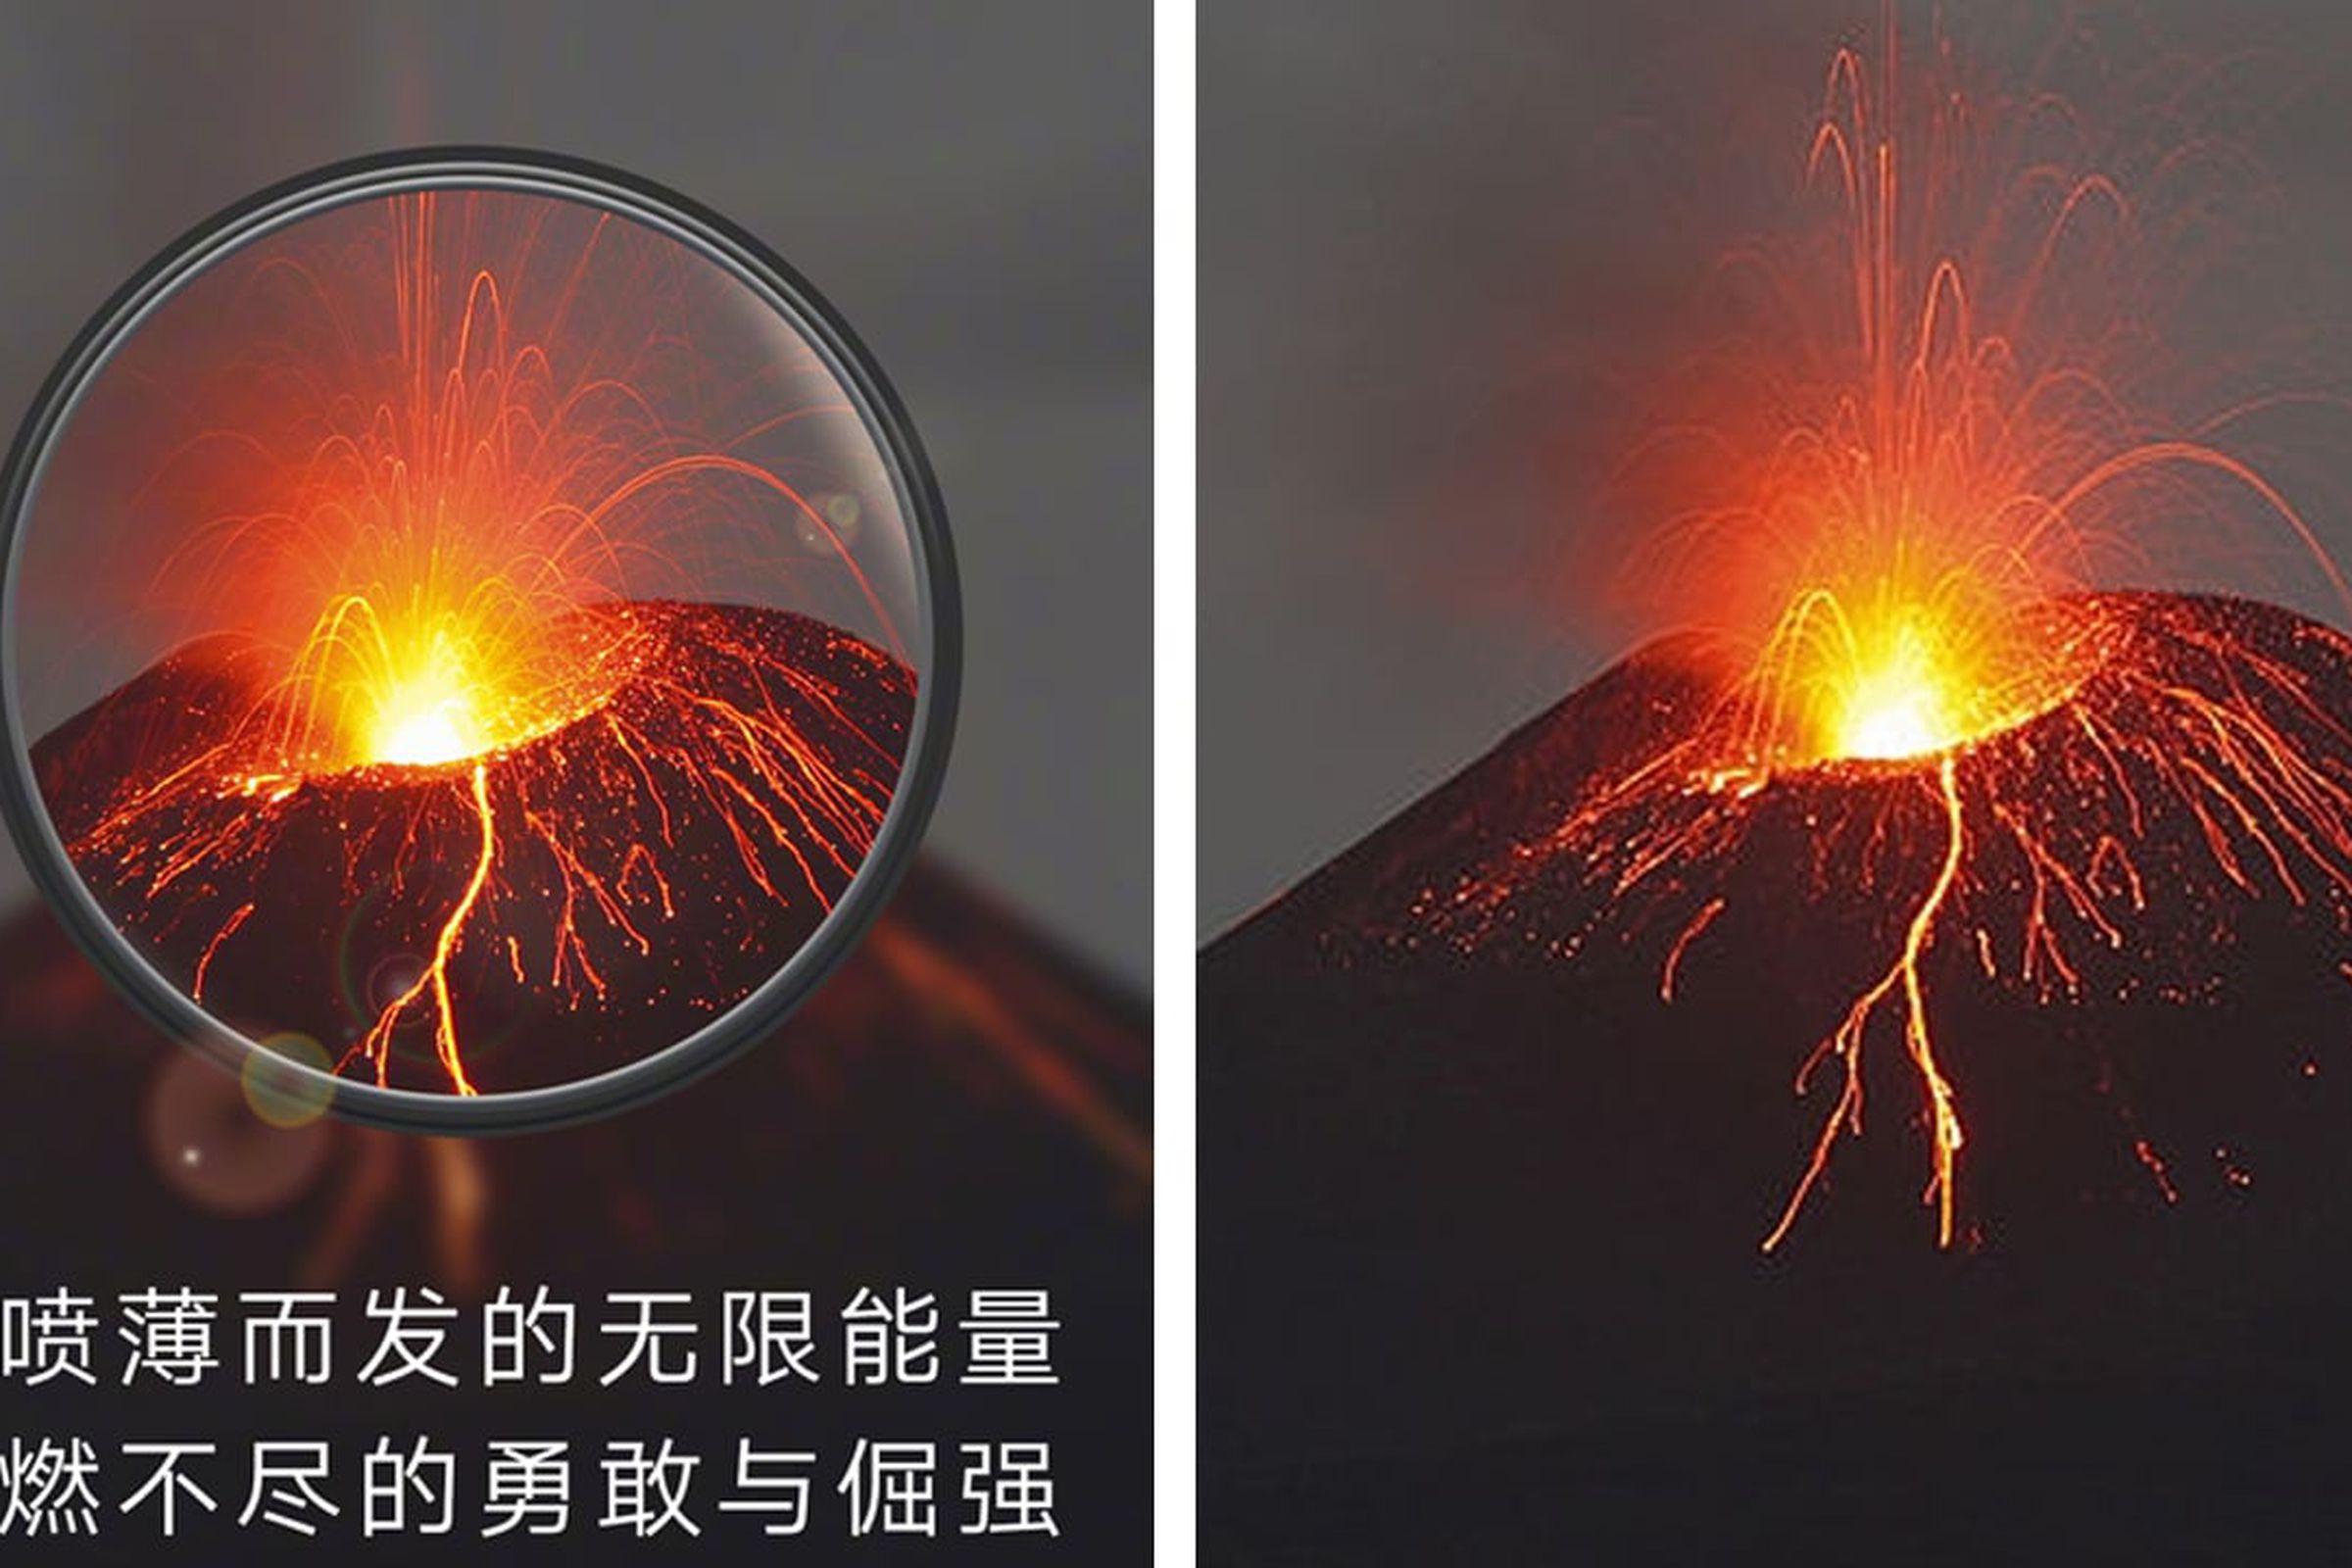 Huawei’s shot (left) vs. original photo (right)